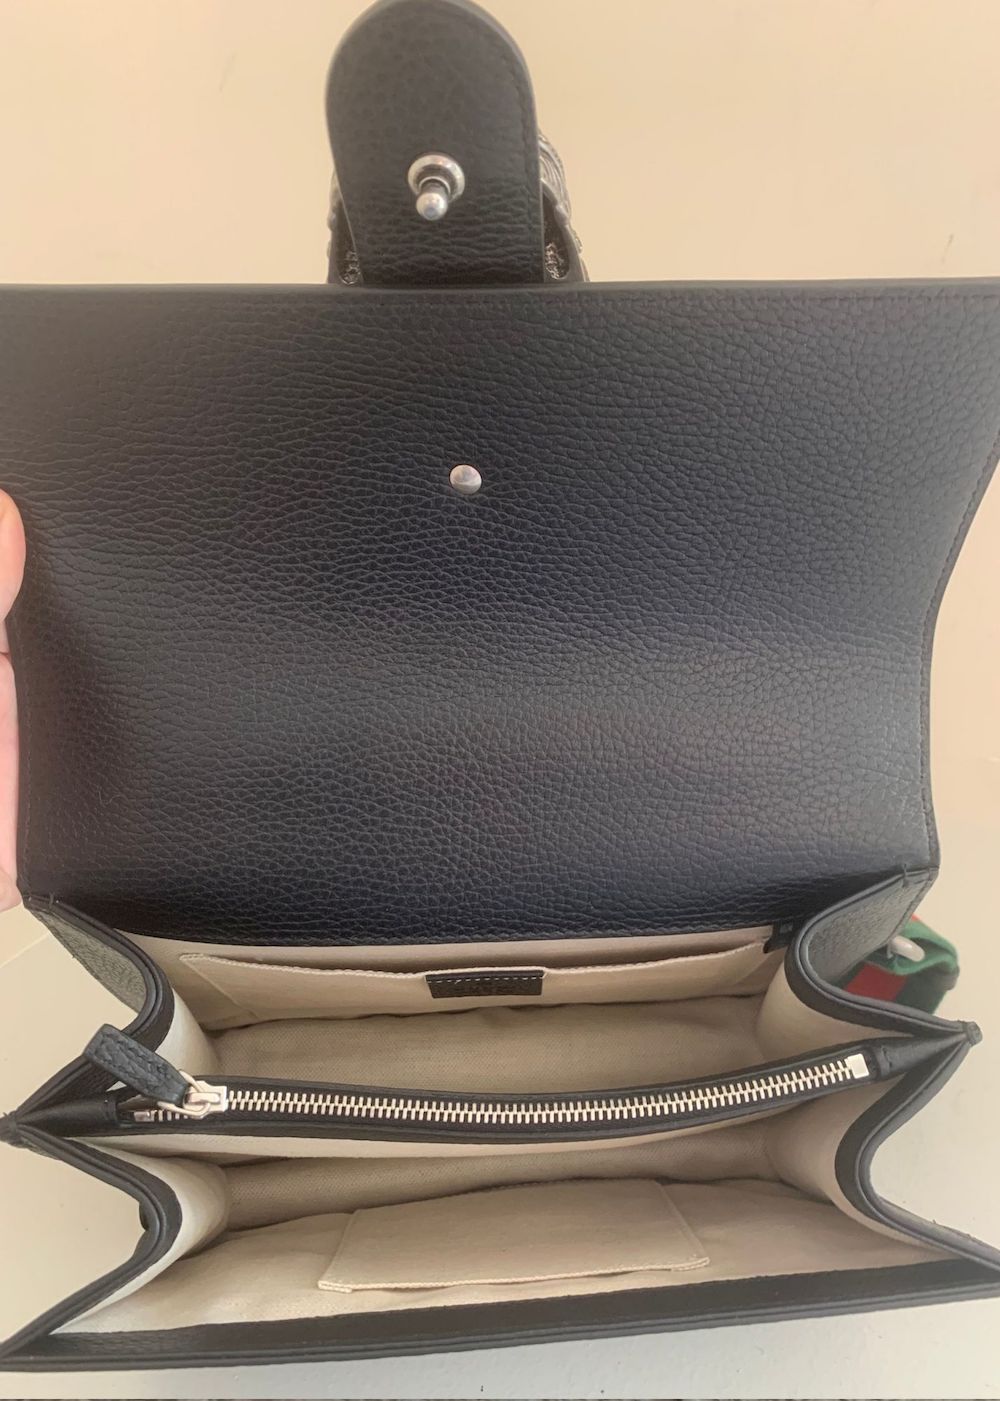 Gucci Dionysus Leather Handbag